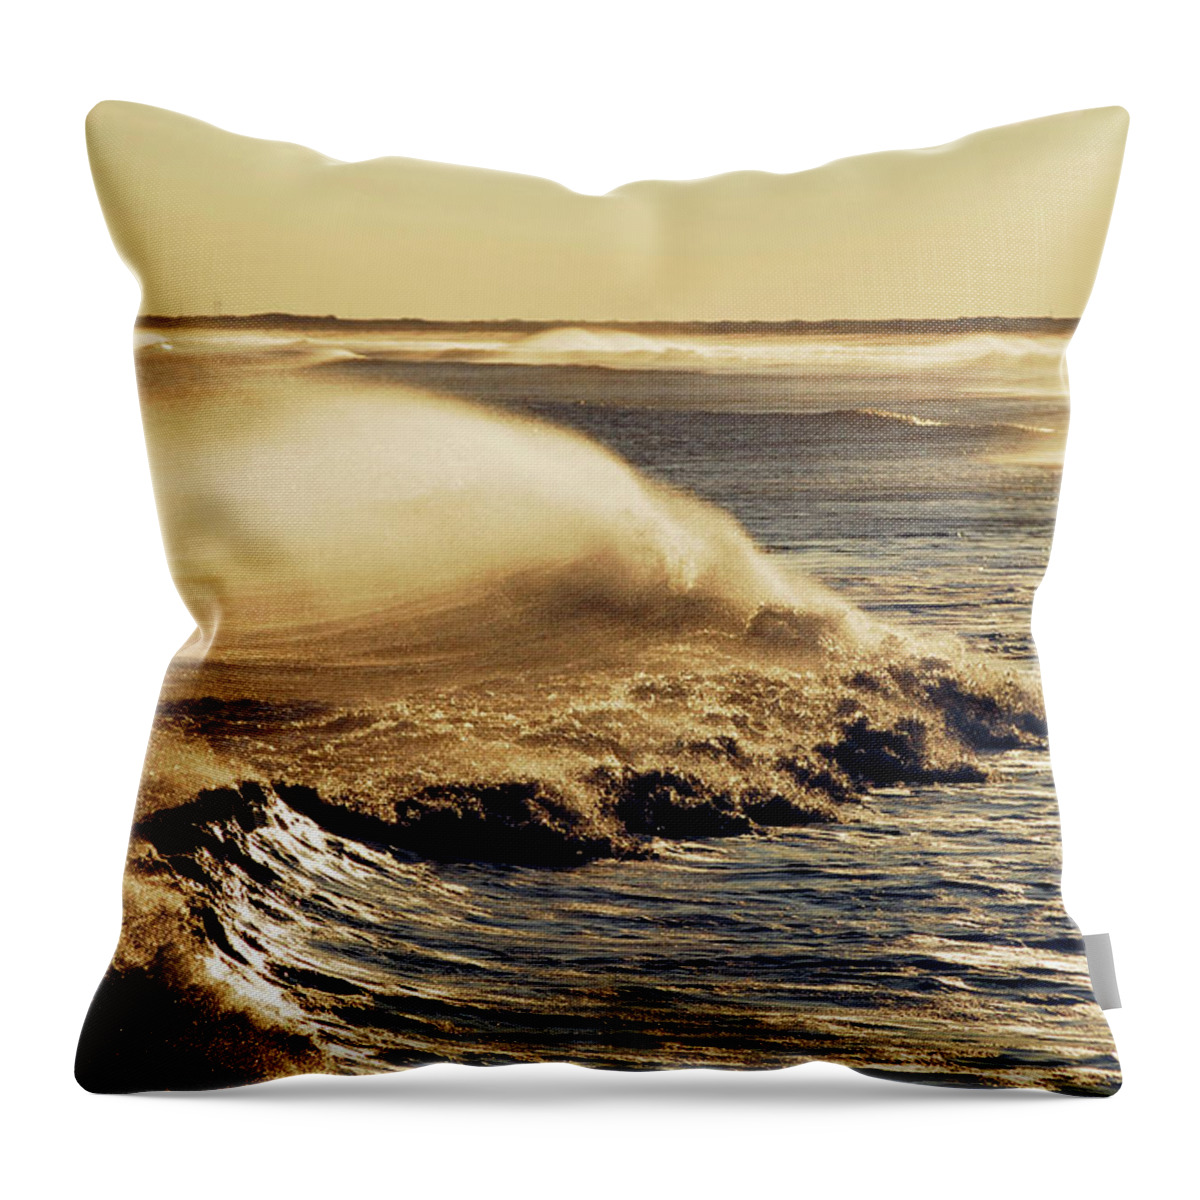 Ocean Throw Pillow featuring the photograph Ocean Calm by Elsa Santoro